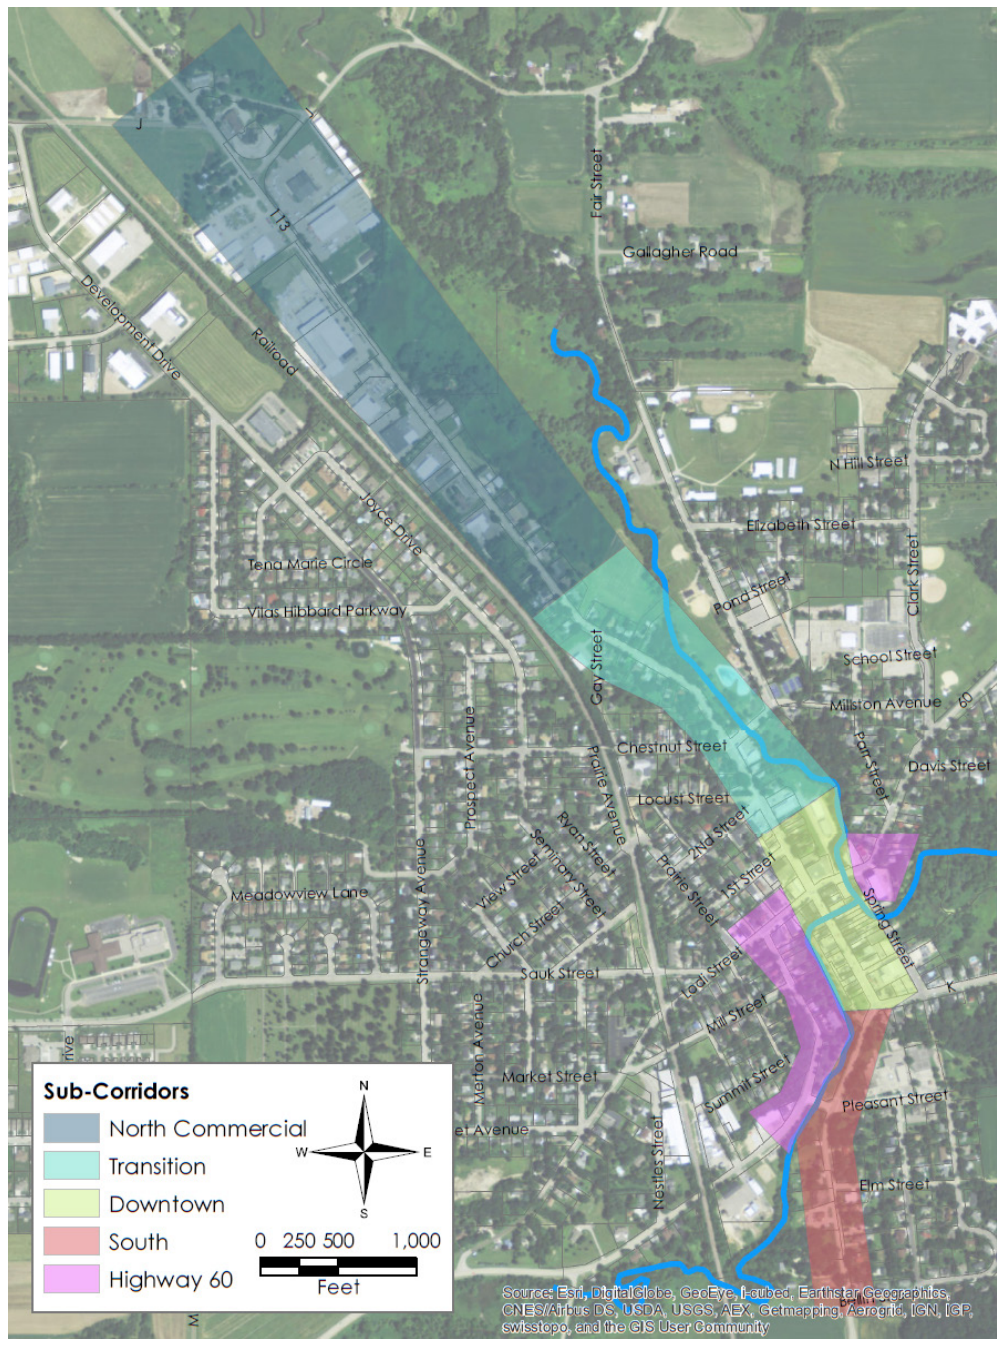 Sub-corridors for the Lodi WI Corridor plan